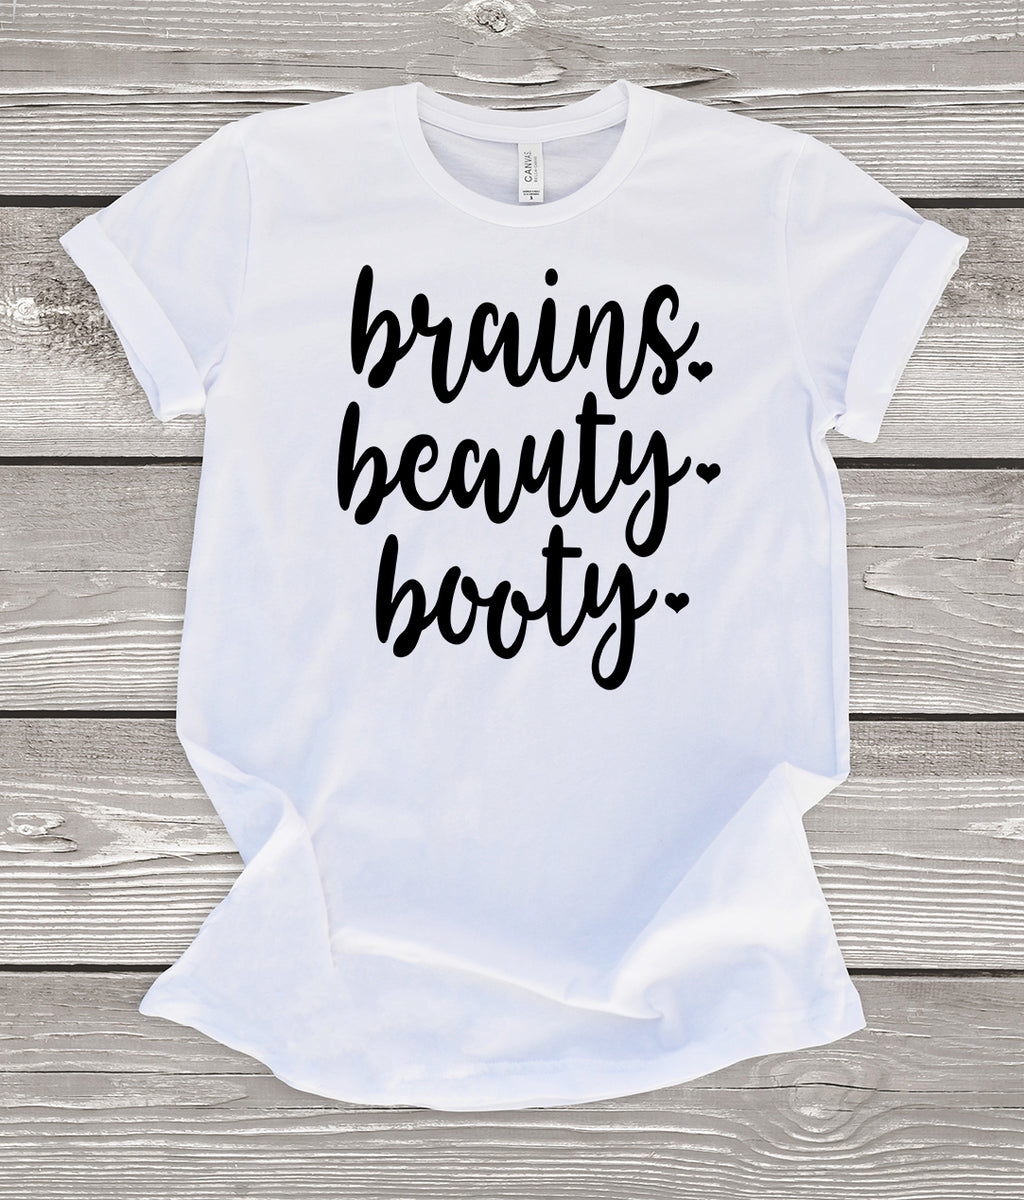 Brains Beauty Booty T-Shirt